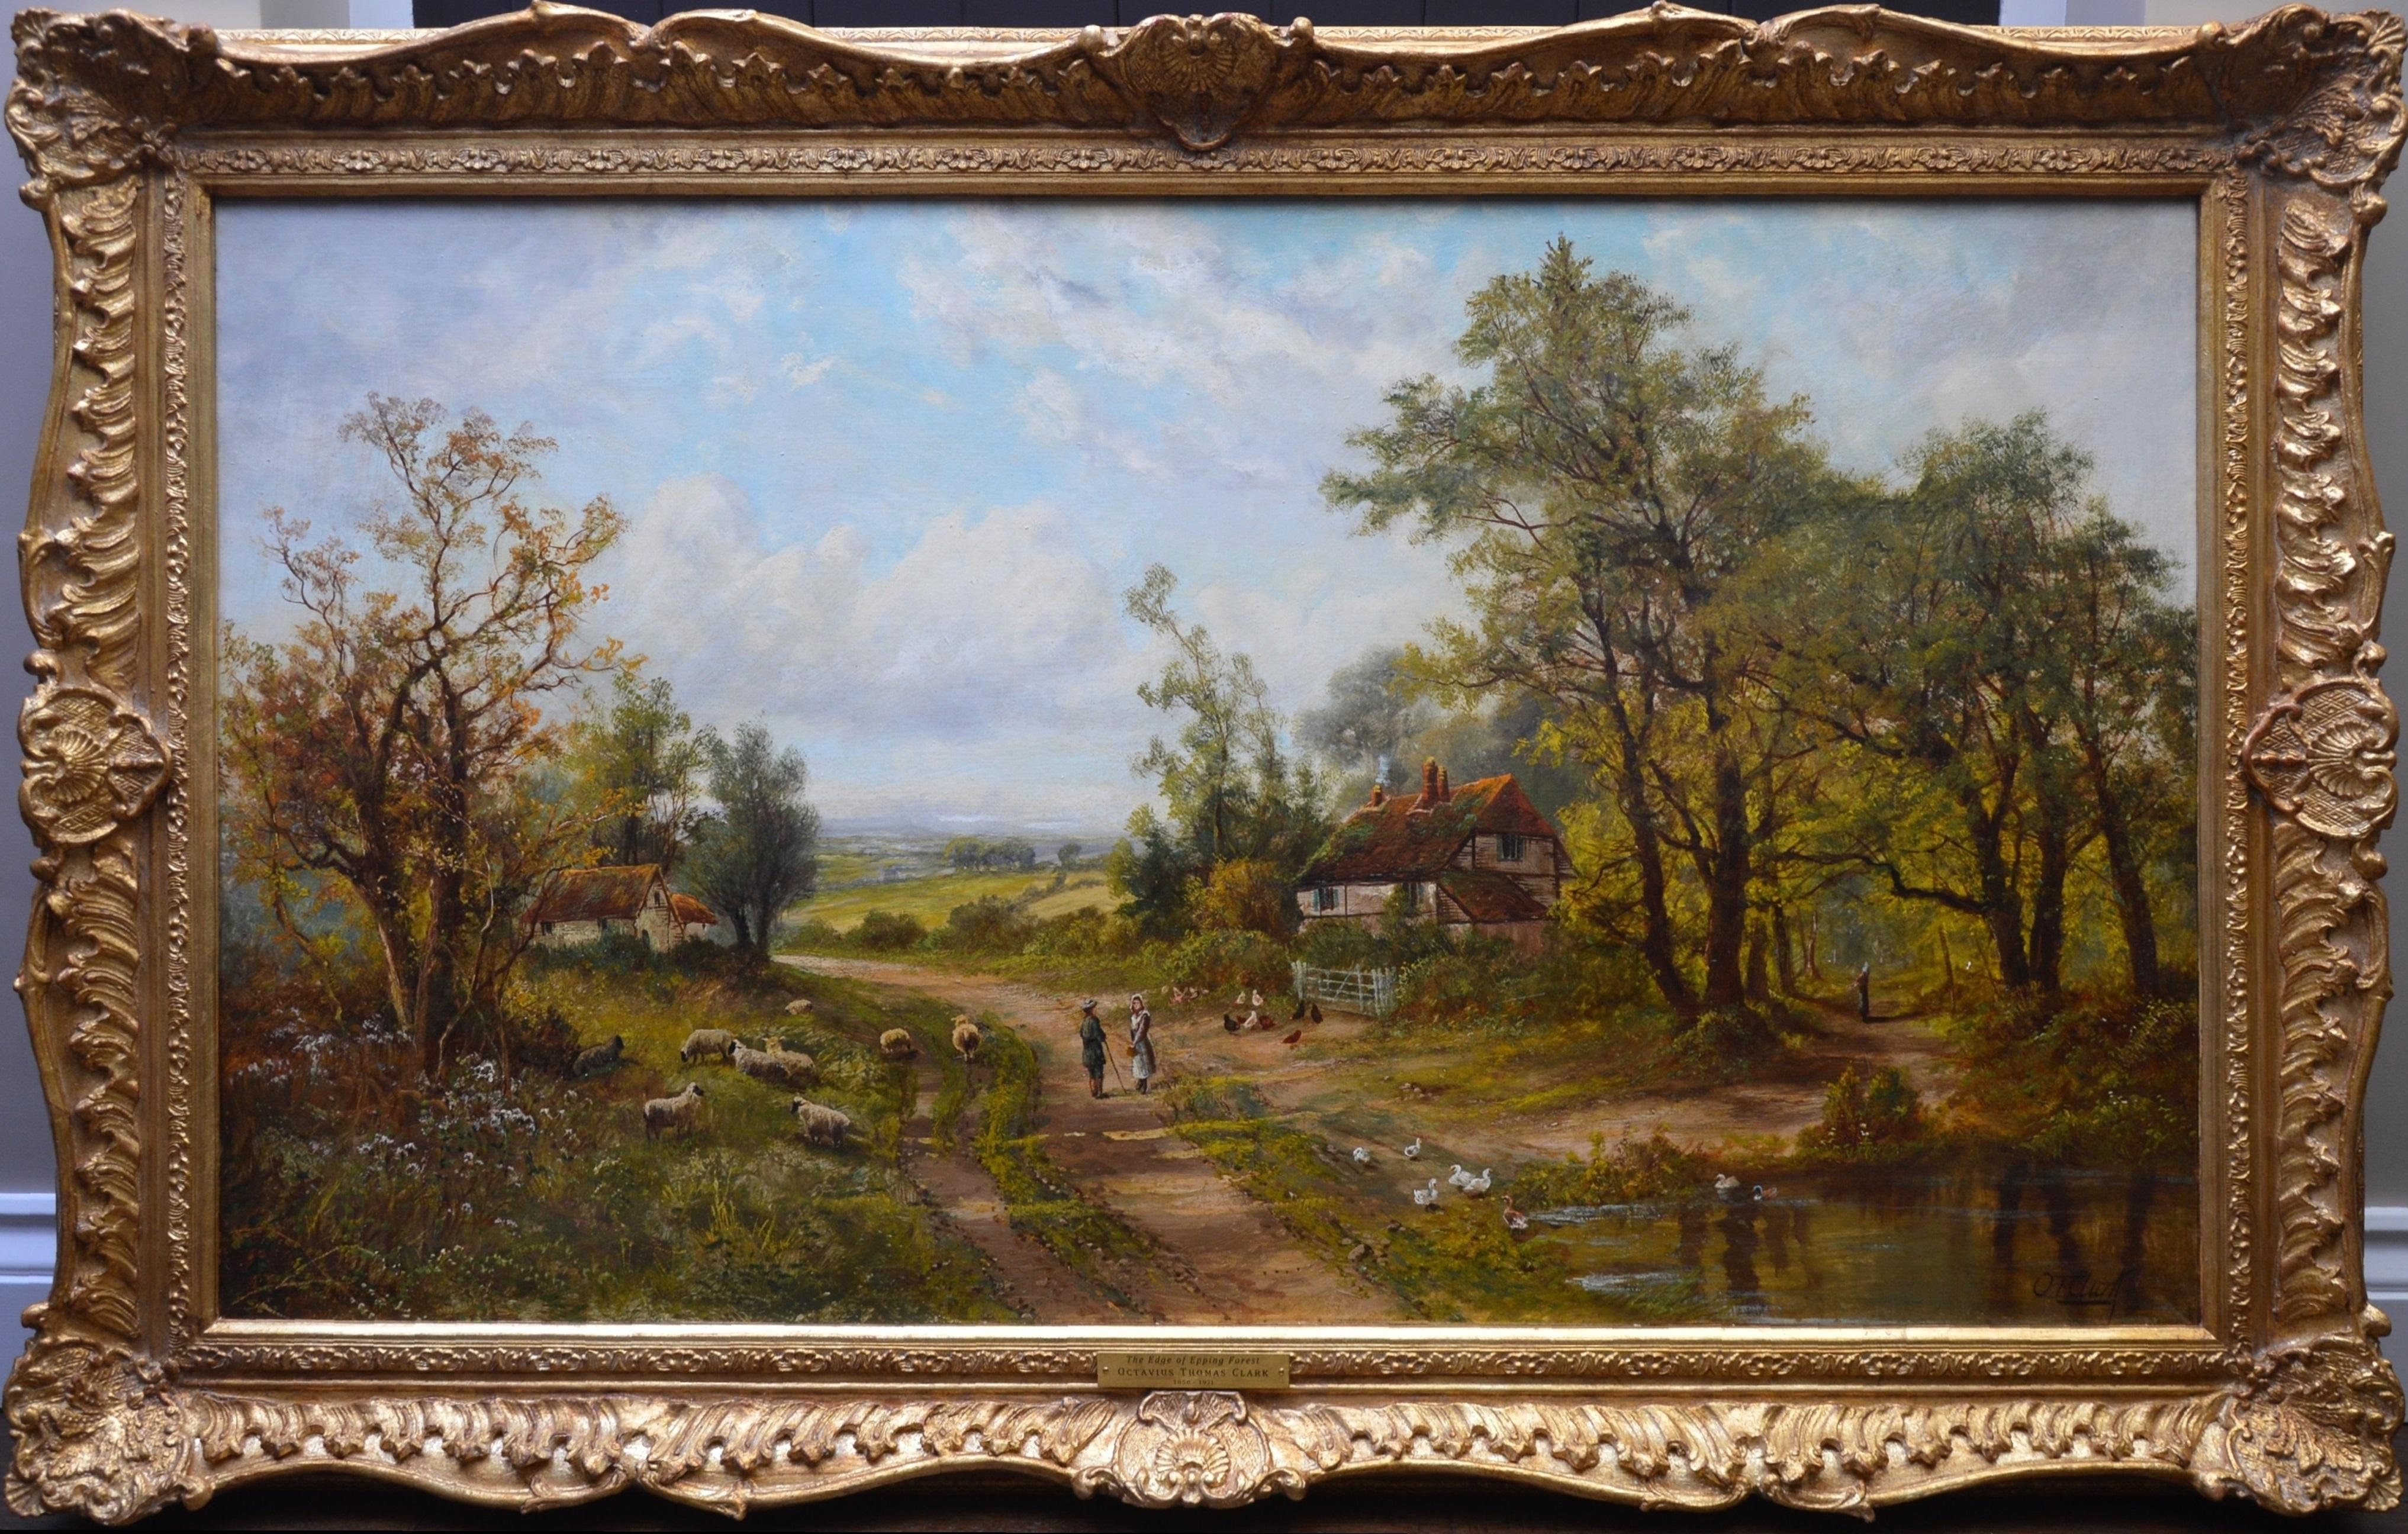 Octavius Thomas Clark Figurative Painting - The Edge of Epping Forest - Large 19th Century English Landscape Oil Painting